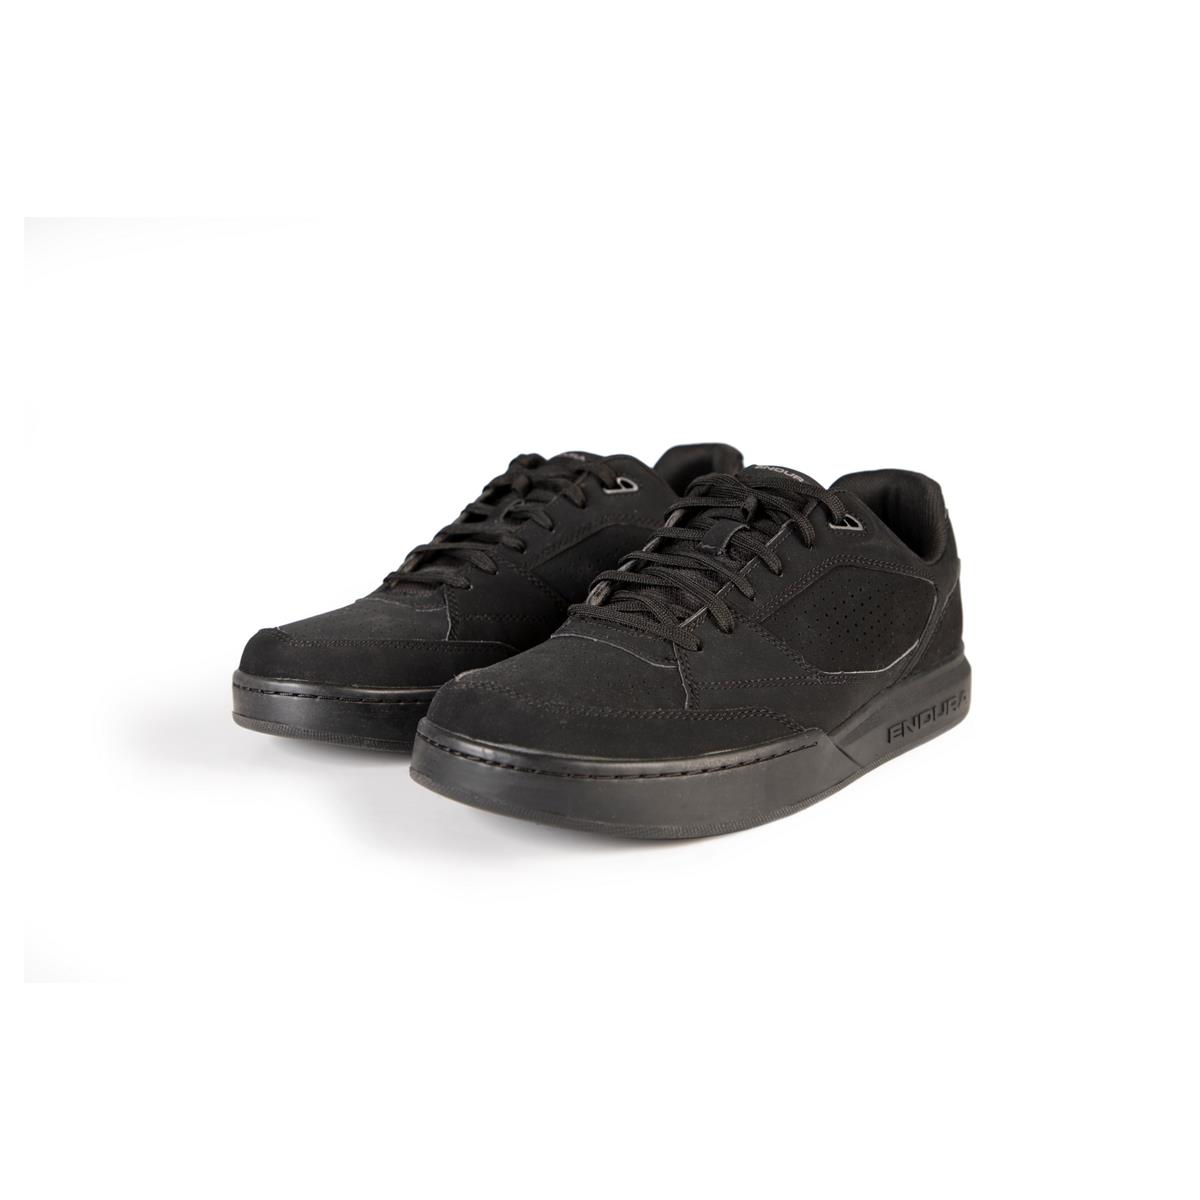 Hummvee Flat Pedal Shoes Black Size 39